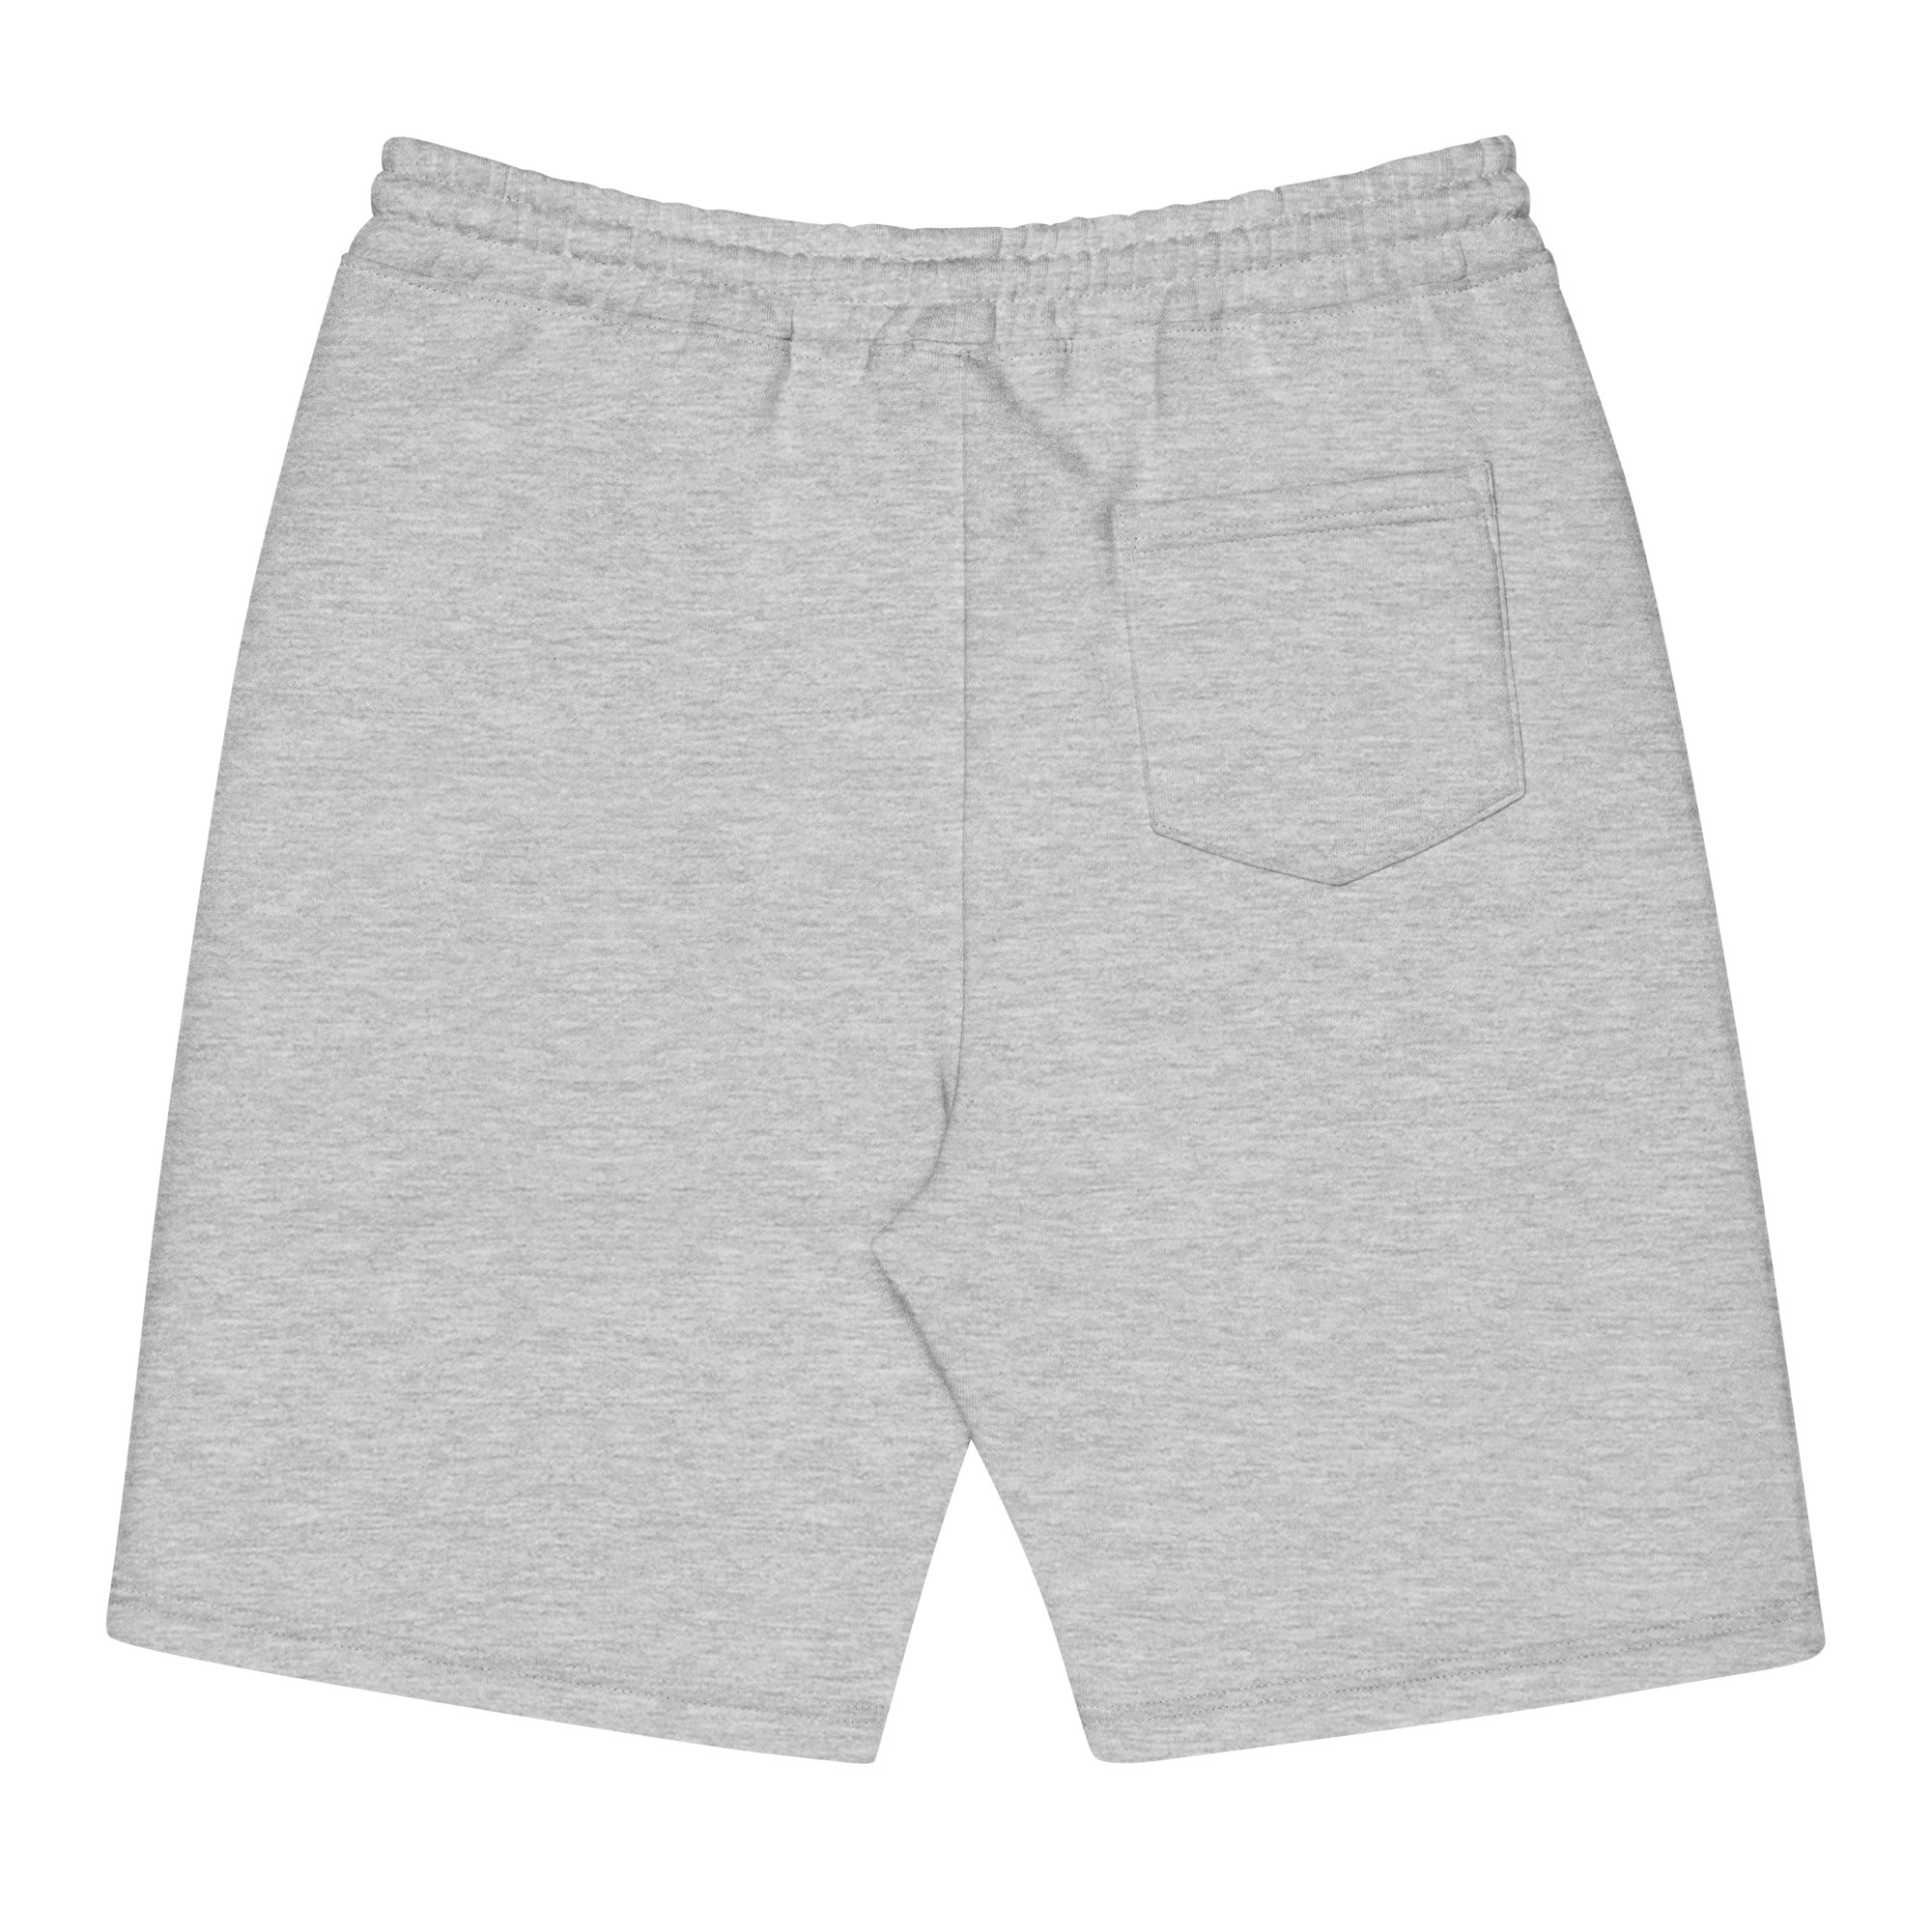 Stitched Men's fleece shorts